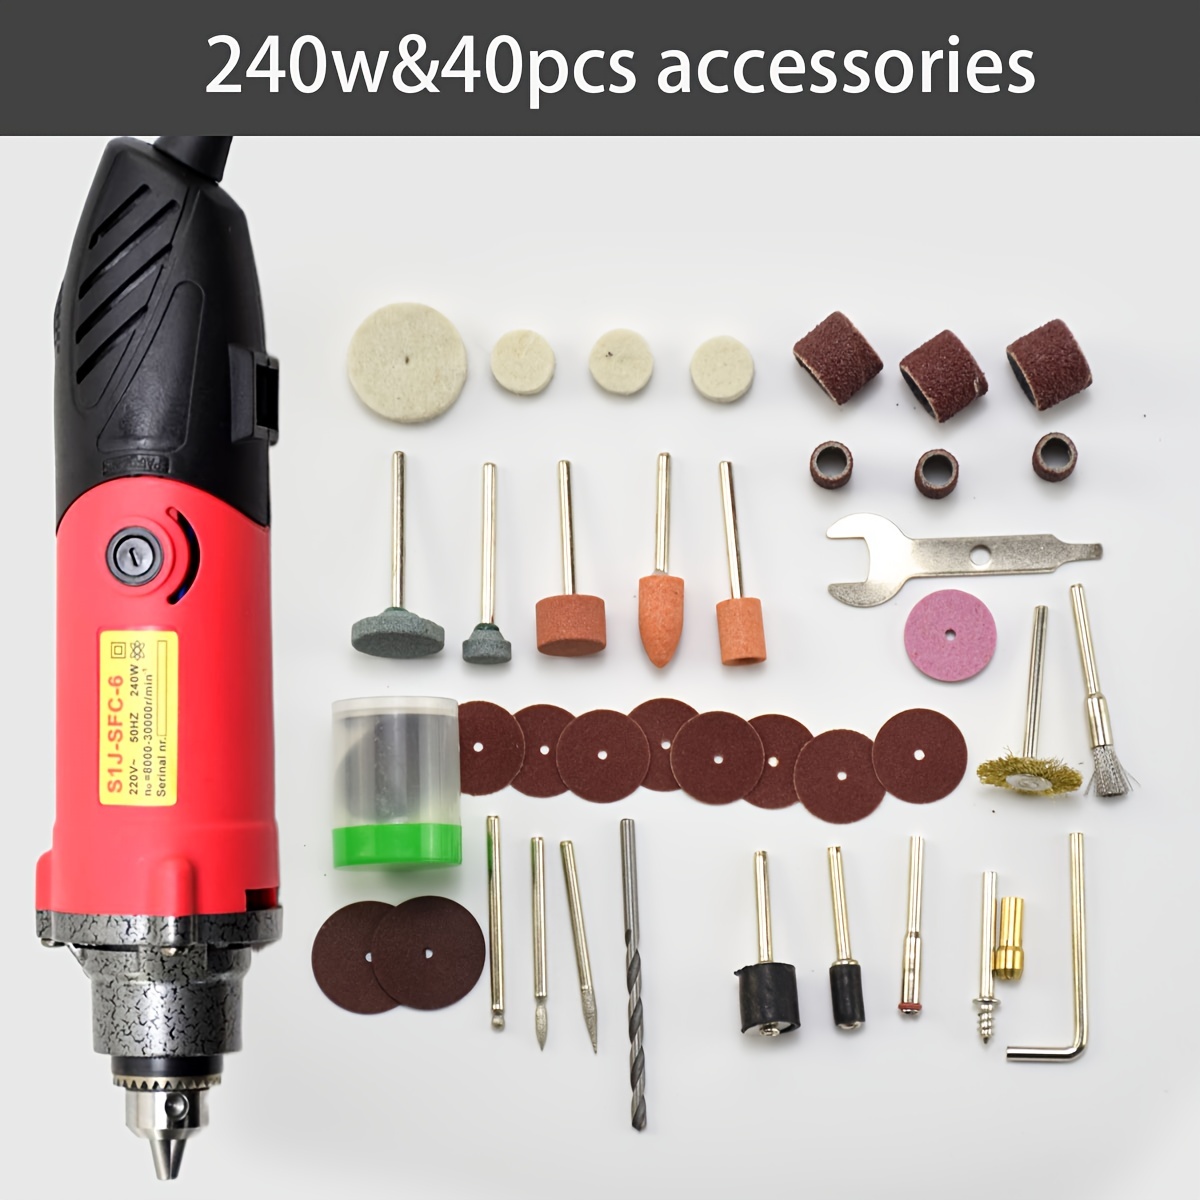 Electric Mini Hand Drill with Power Chuck Rotary Tool Kit: ECVV,SA –